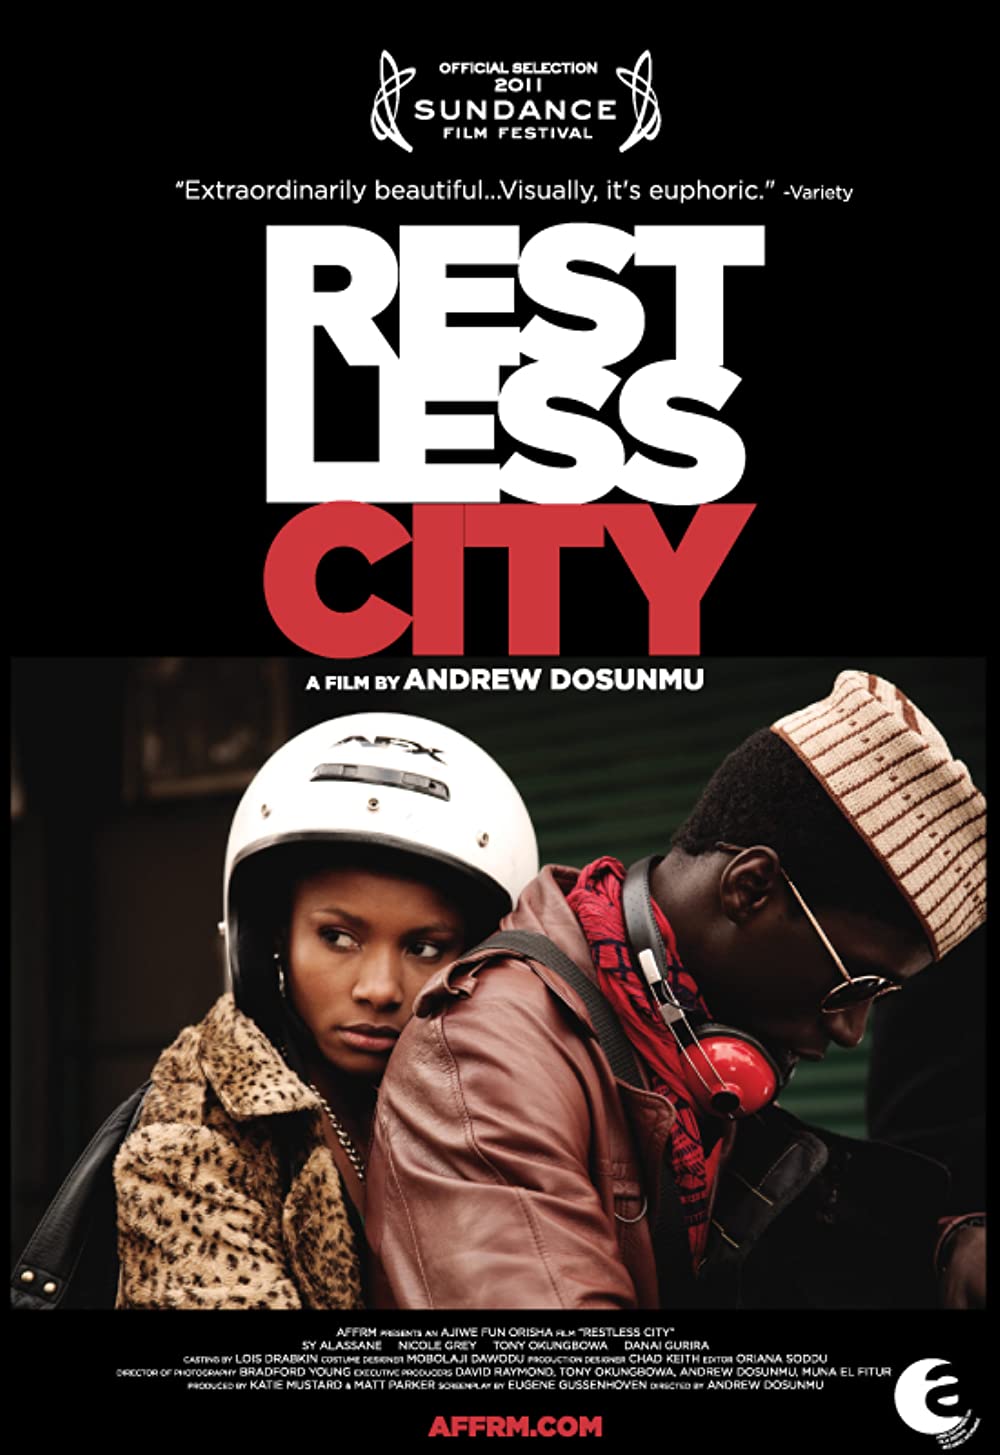 Filmbeschreibung zu Restless City